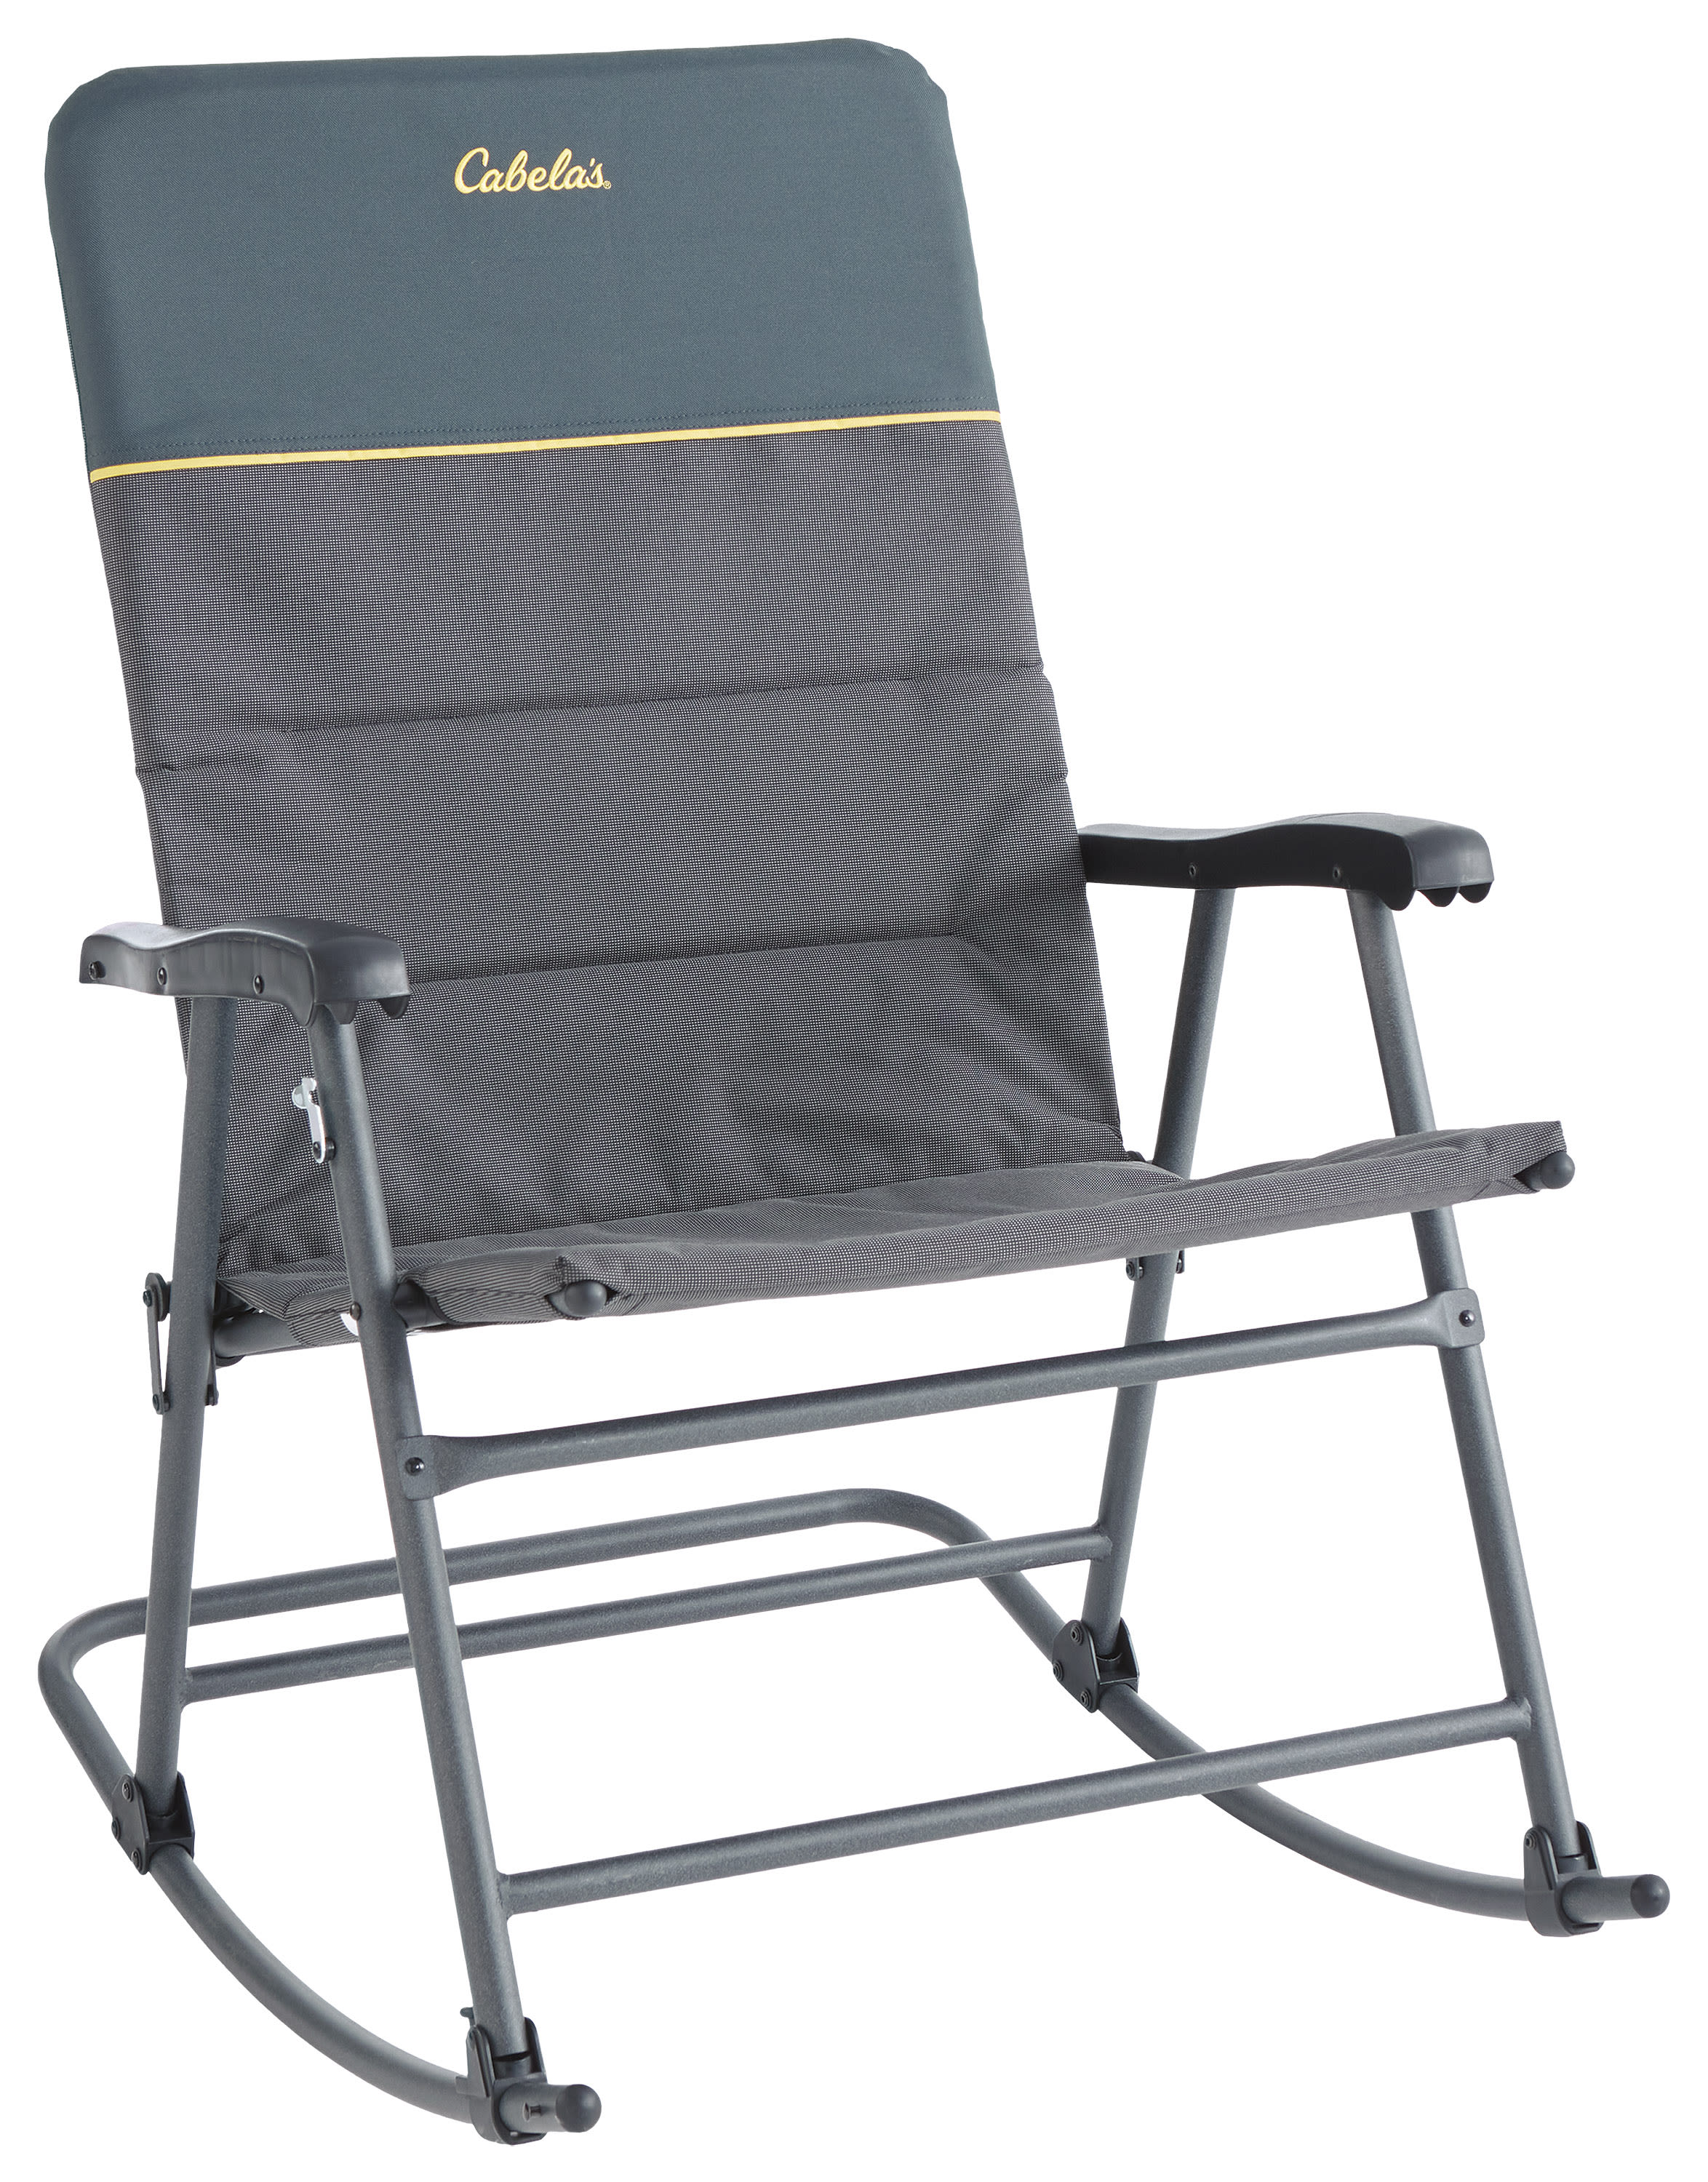 Cabela's® Big Outdoorsman Rocker Camp Chair